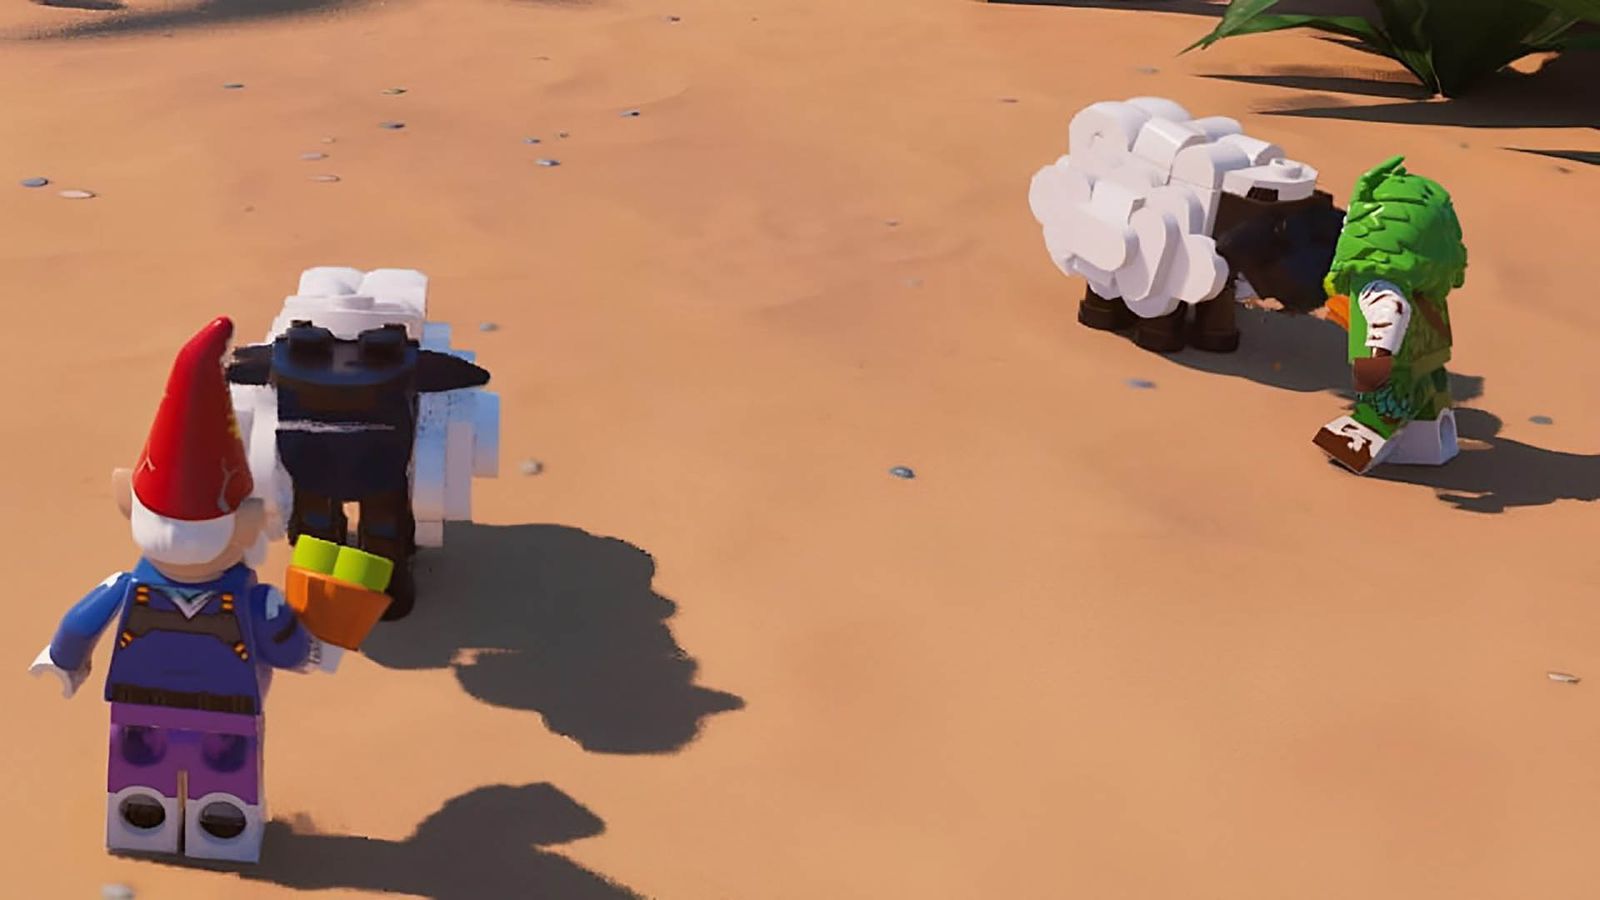 Lego Fortnite player feeding sheep with animal treats